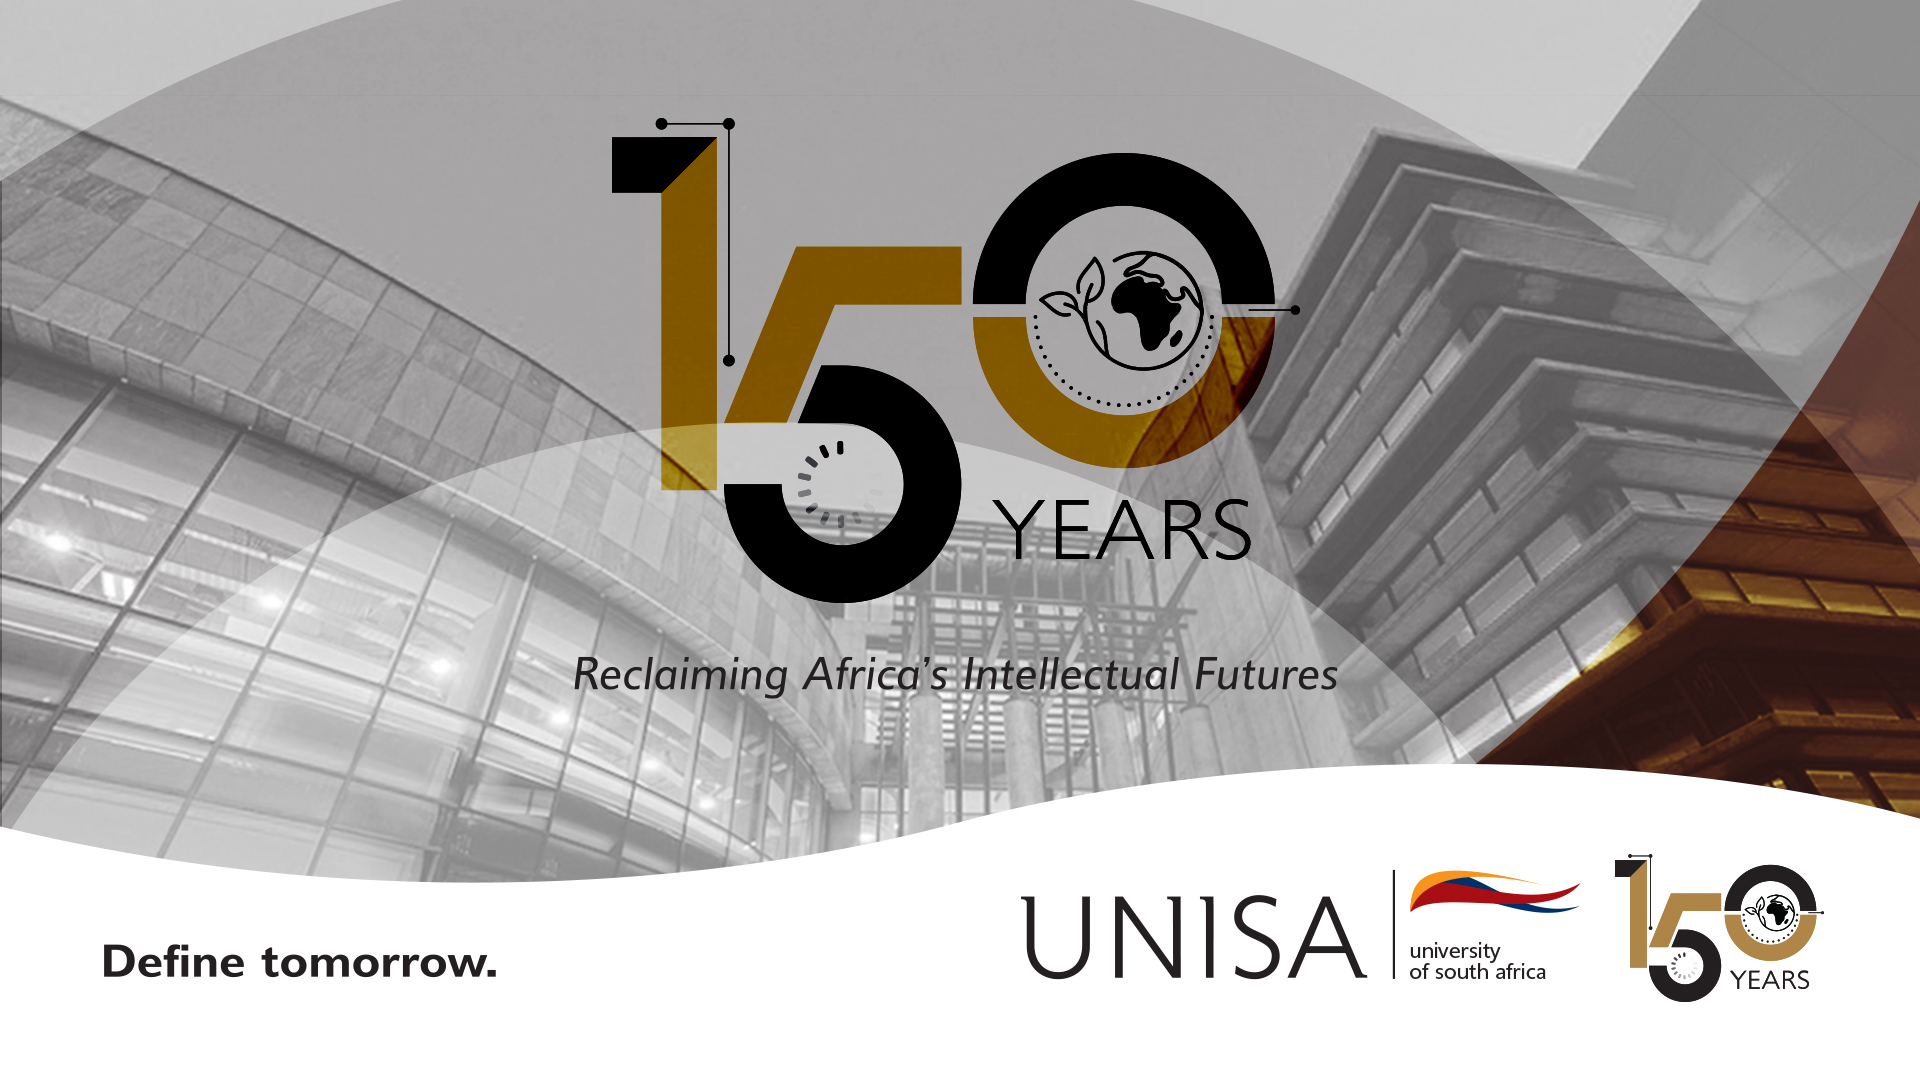 150 days to go to Unisa's 150th birthday